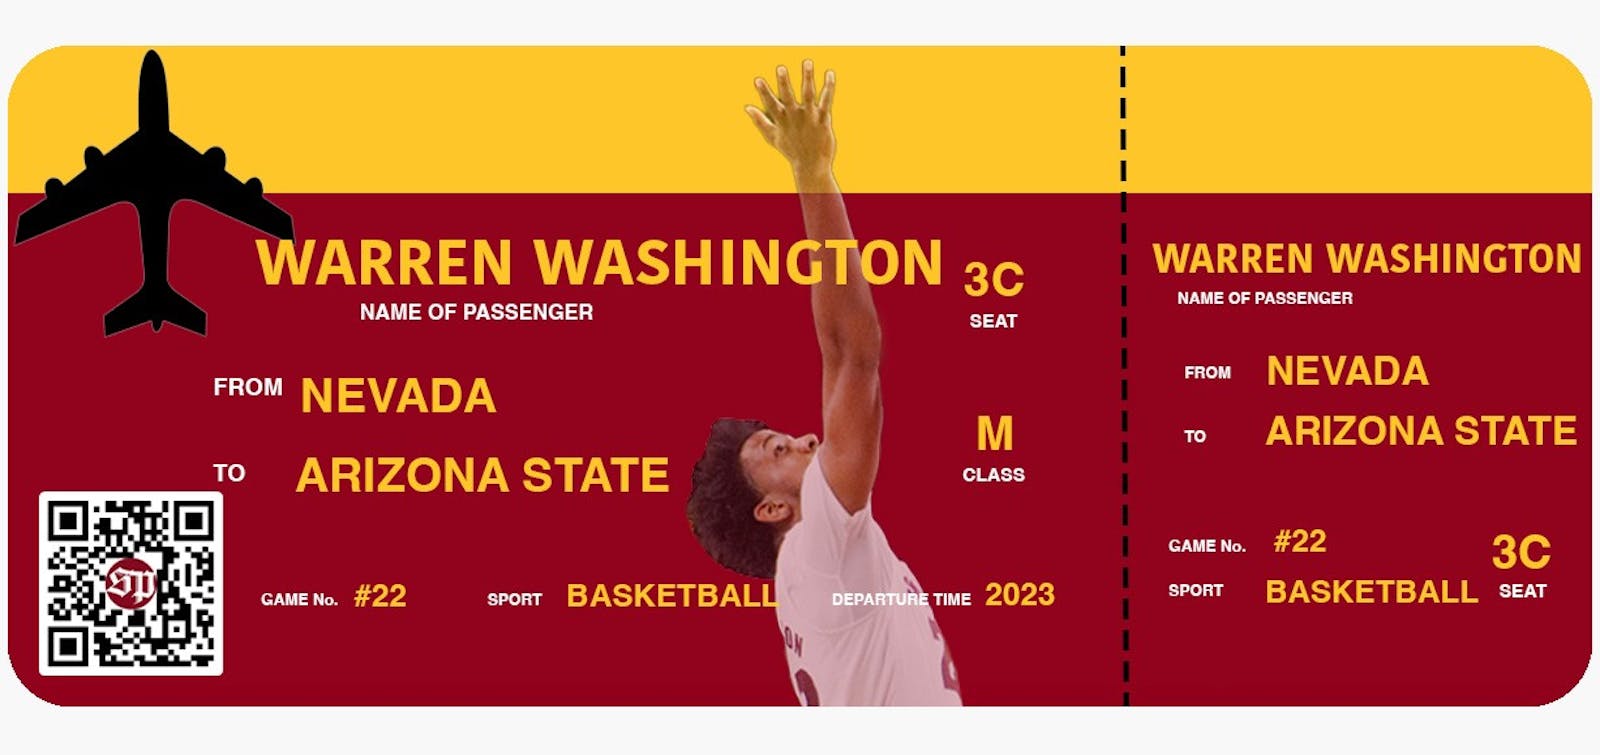 Warren Washington brings ASU men's basketball size it hasn't had in